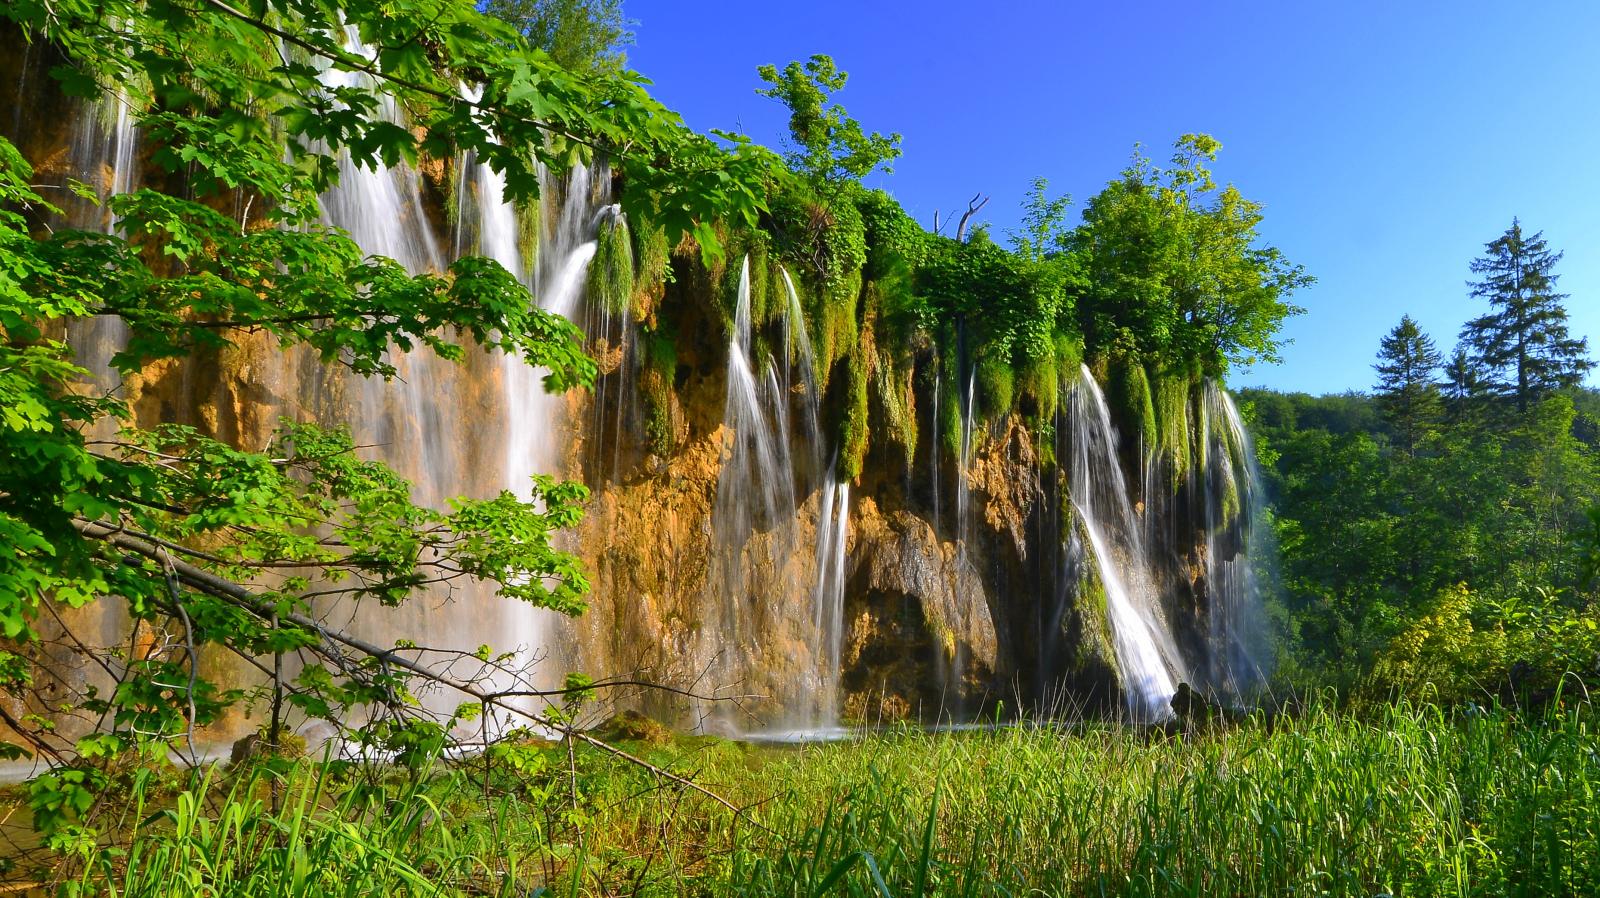 How to Get to Plitvice Lakes National Park from Zagreb, Split & Dubrovnik